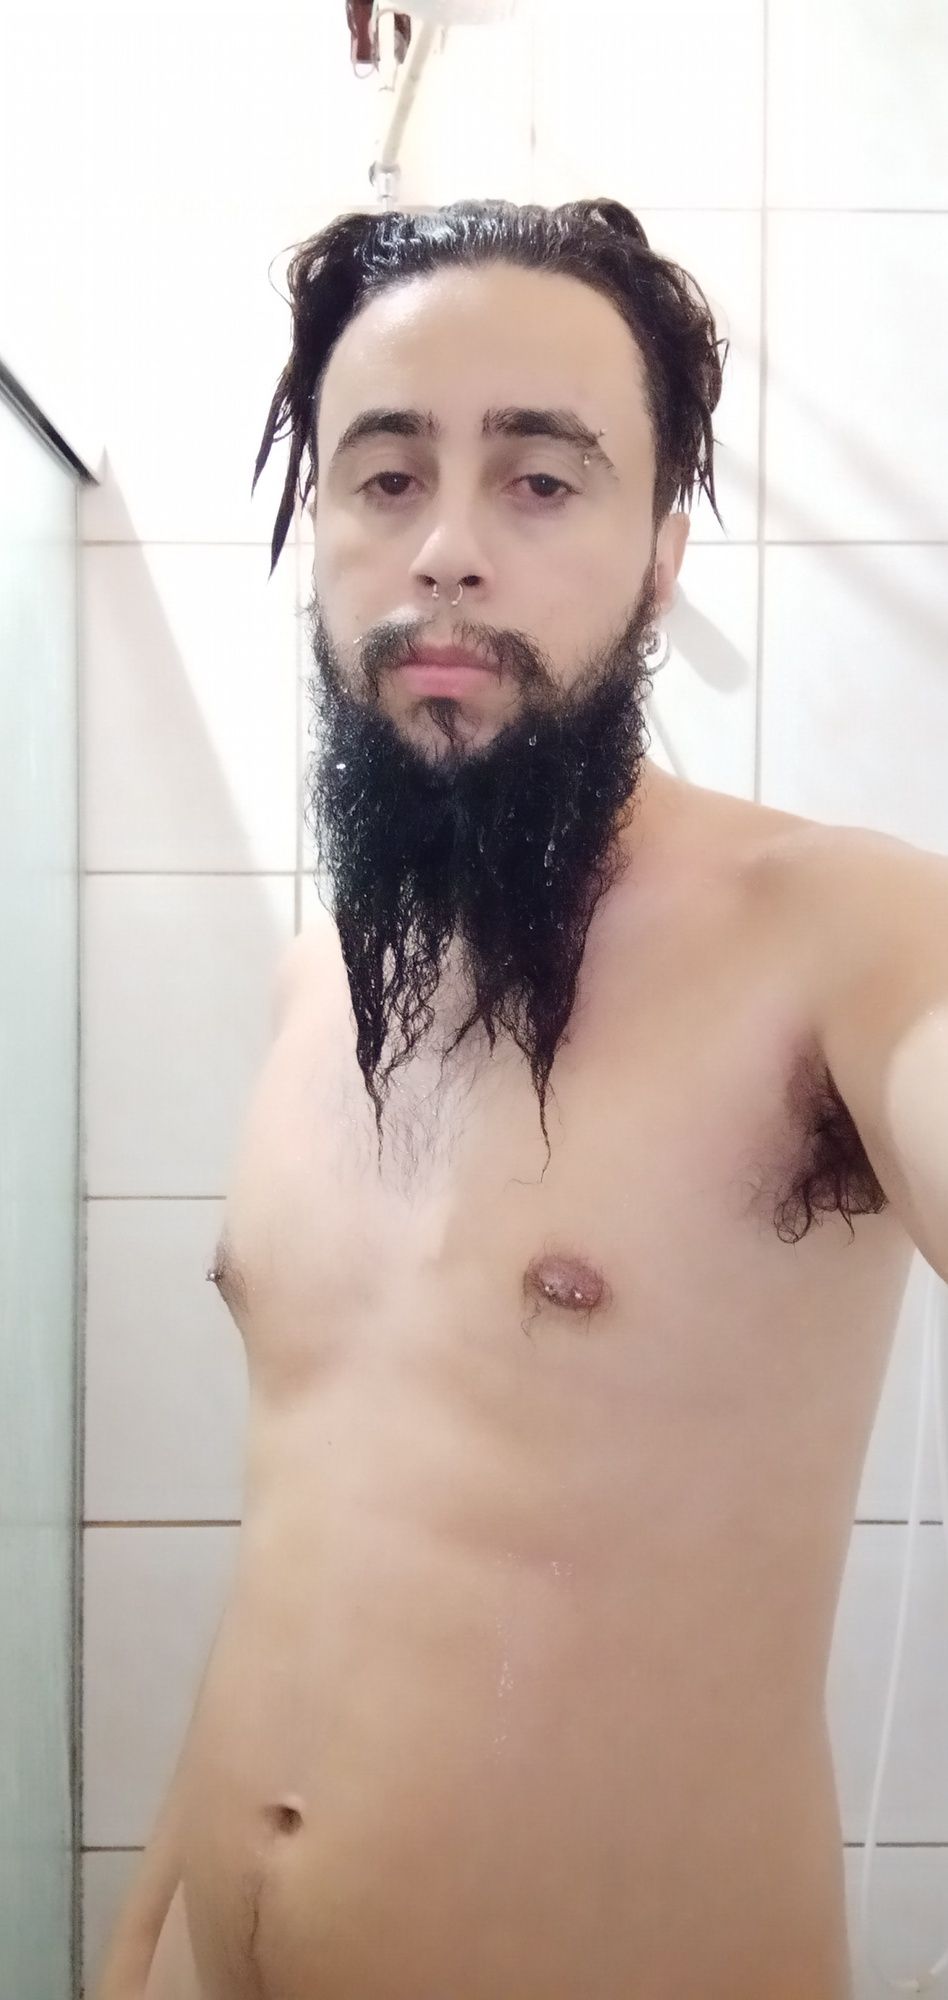 Shower #5